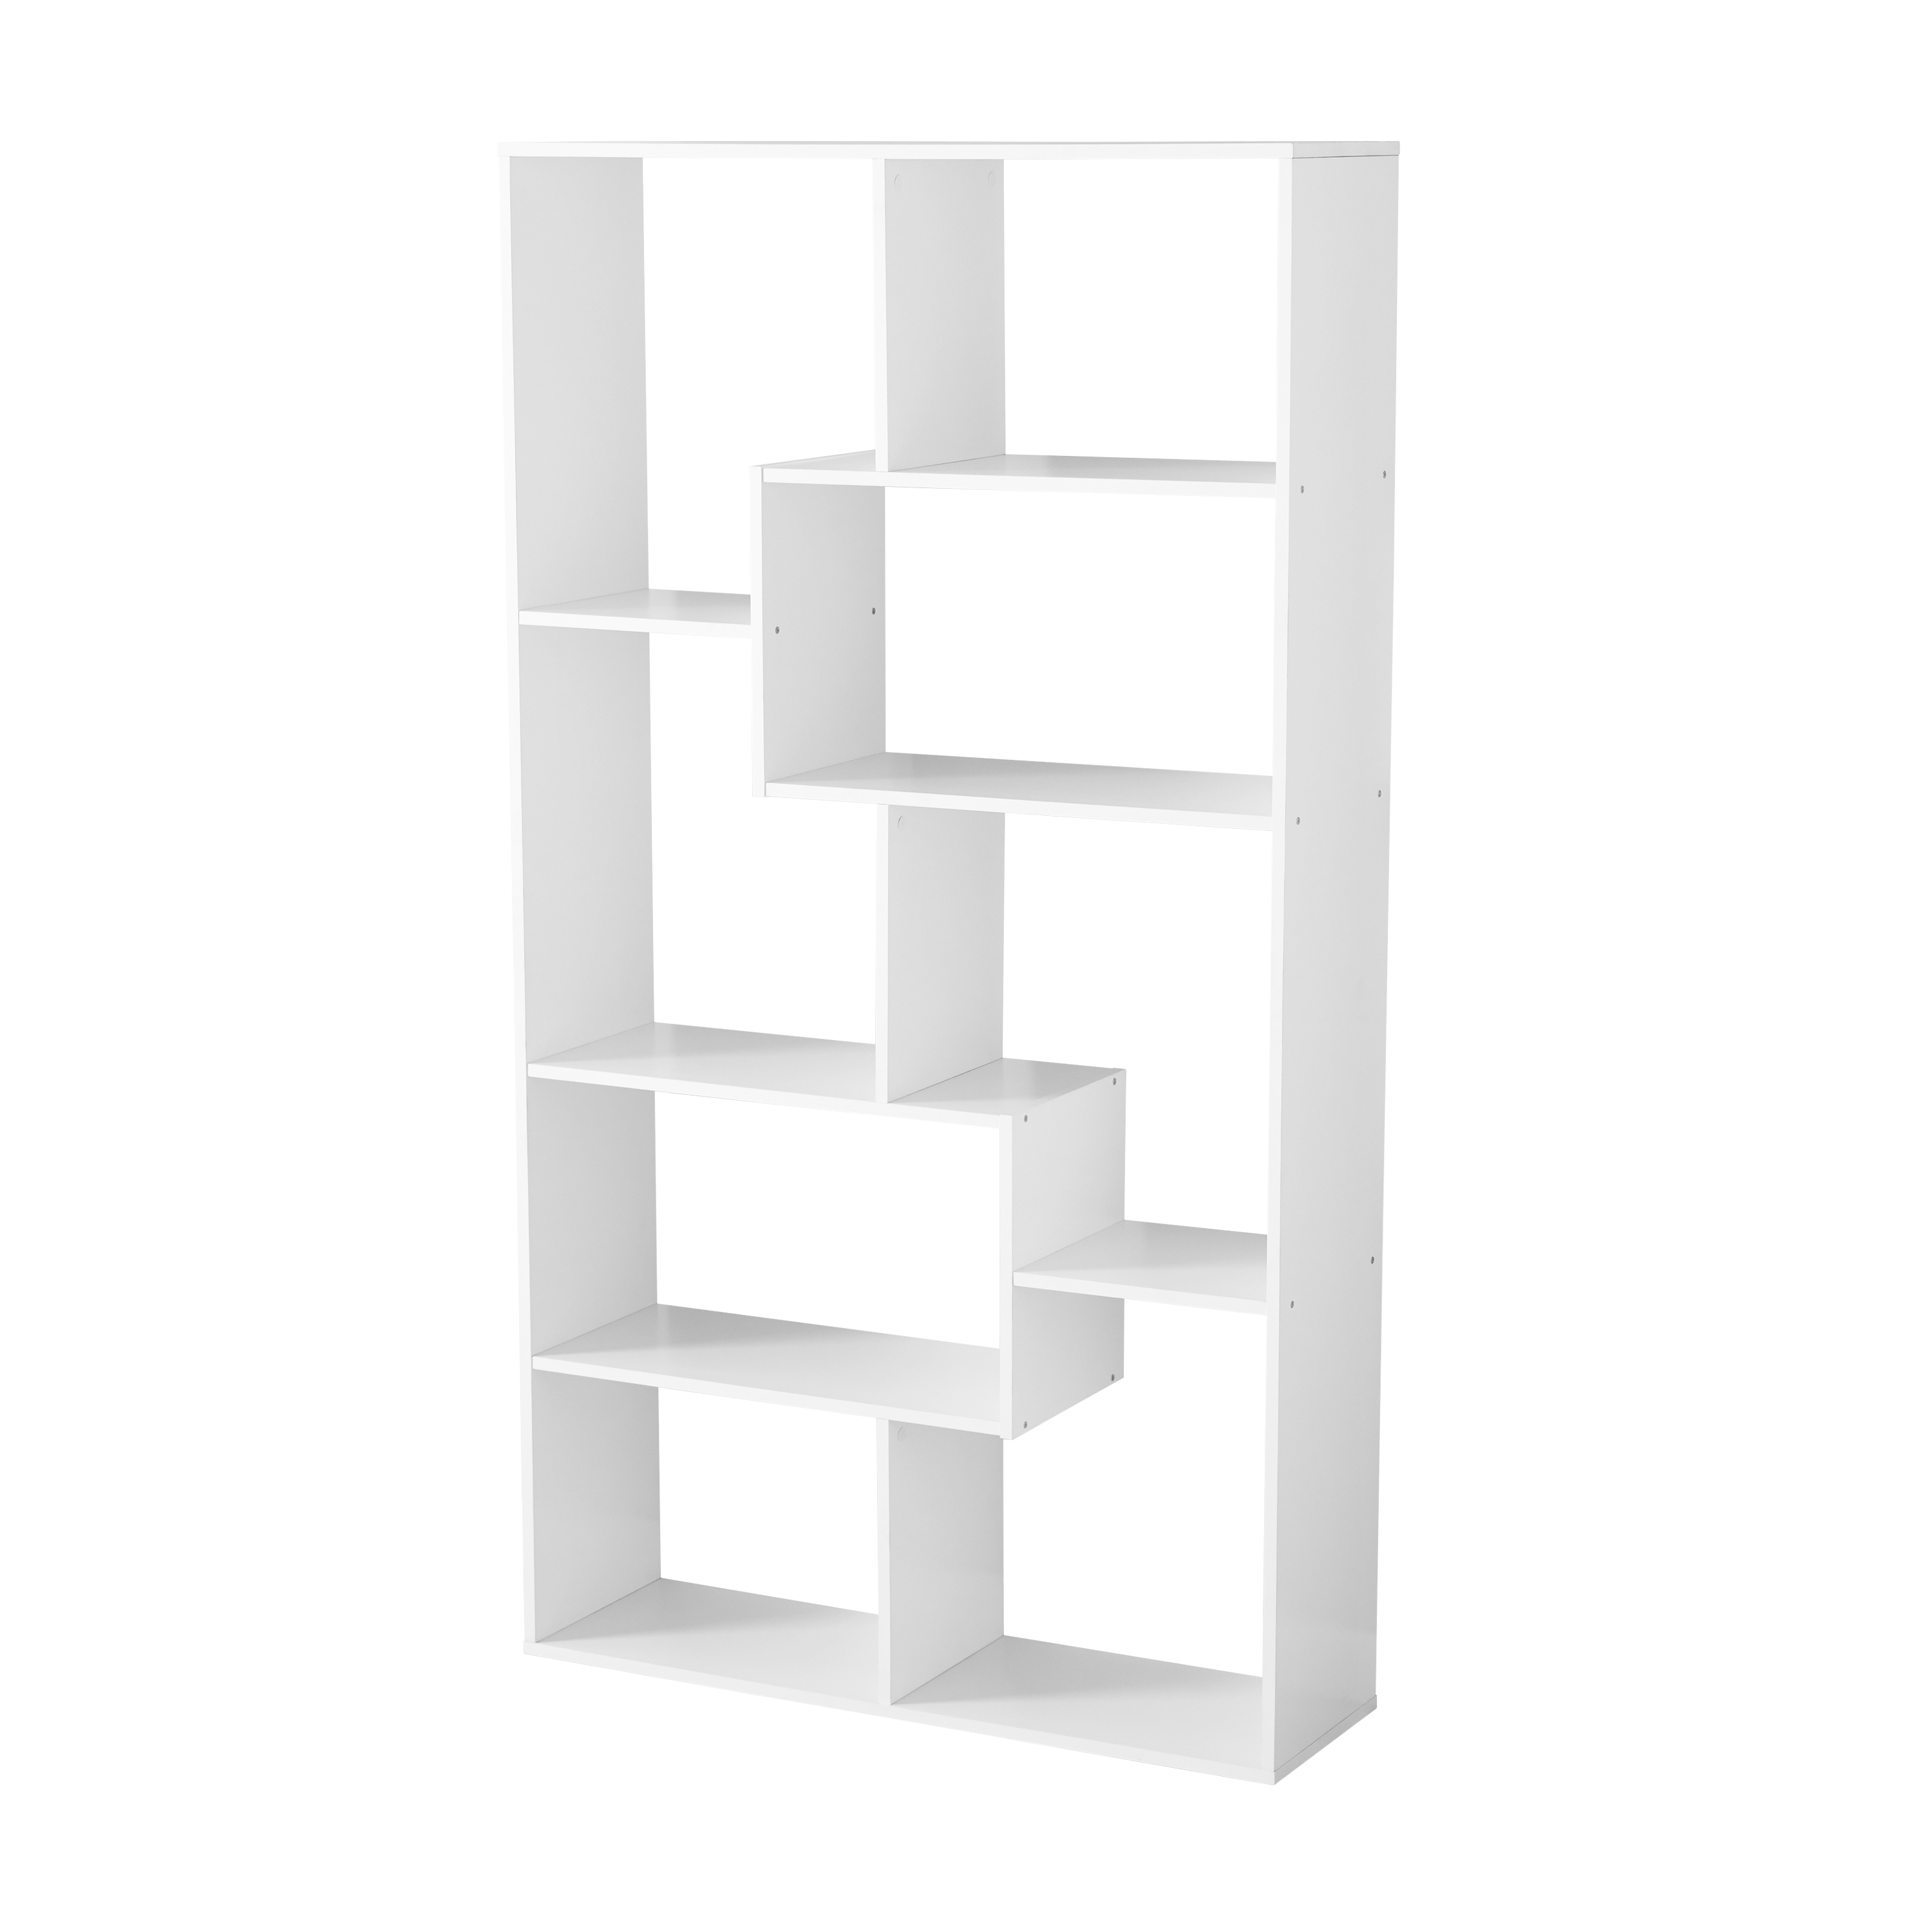 Mainstays 8-Cube Bookcase, White - image 2 of 5